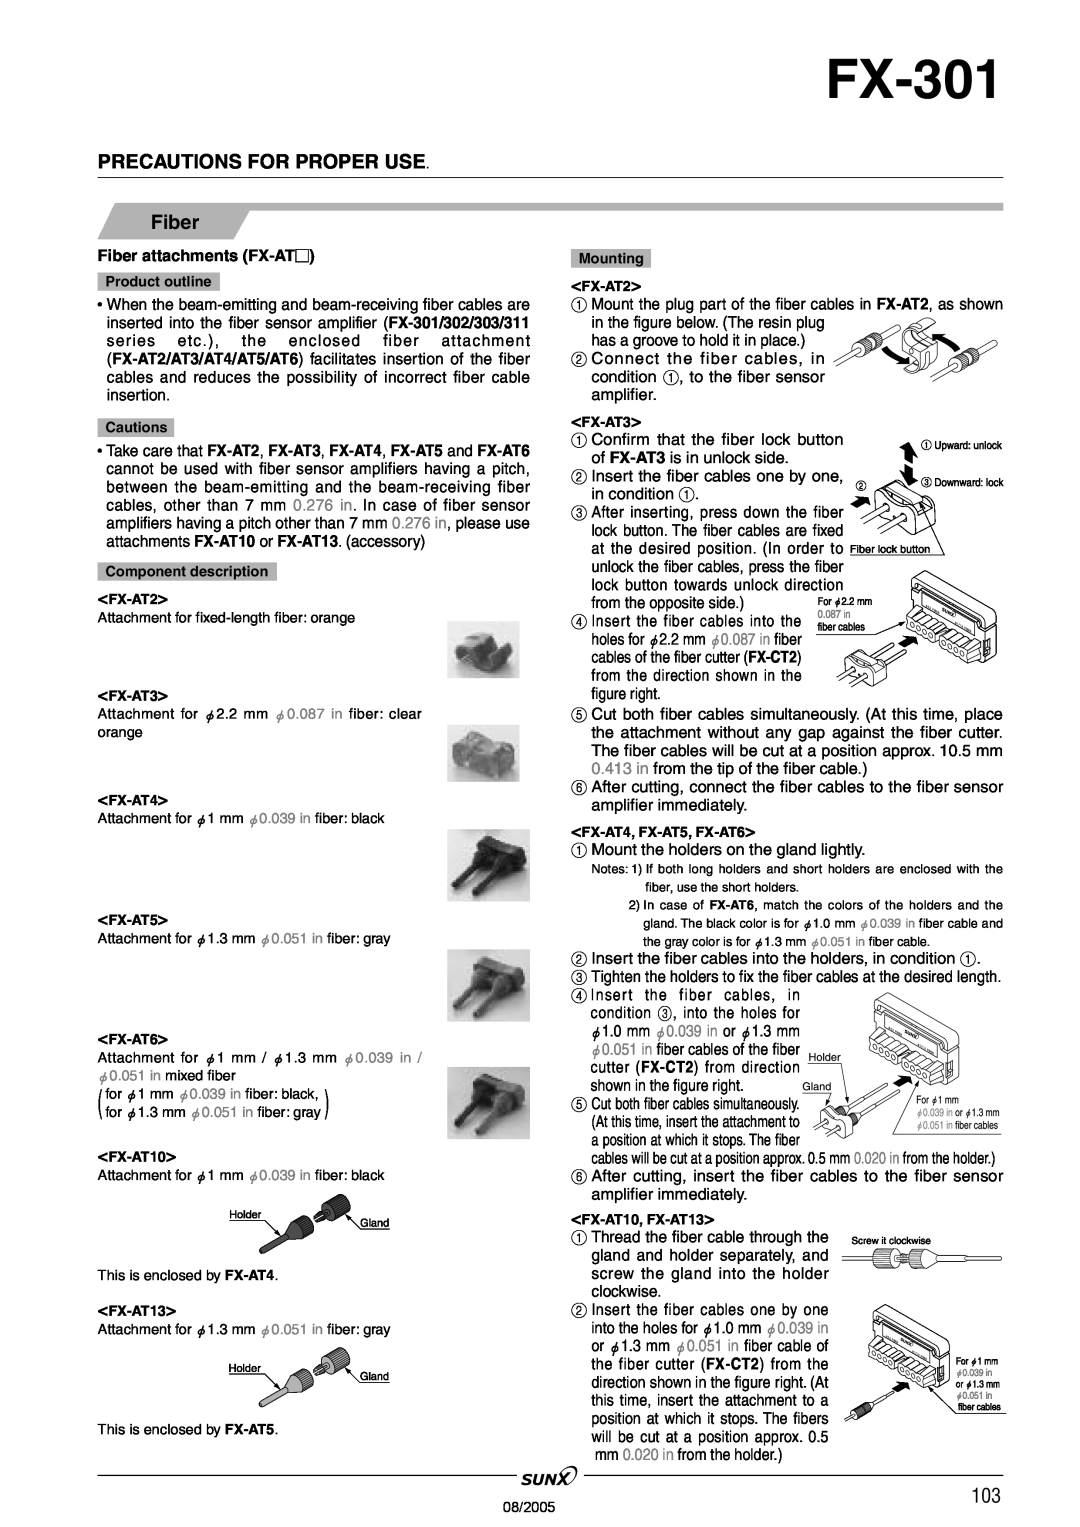 Panasonic FX-301 manual Fiber attachments FX-AT, Precautions For Proper Use 